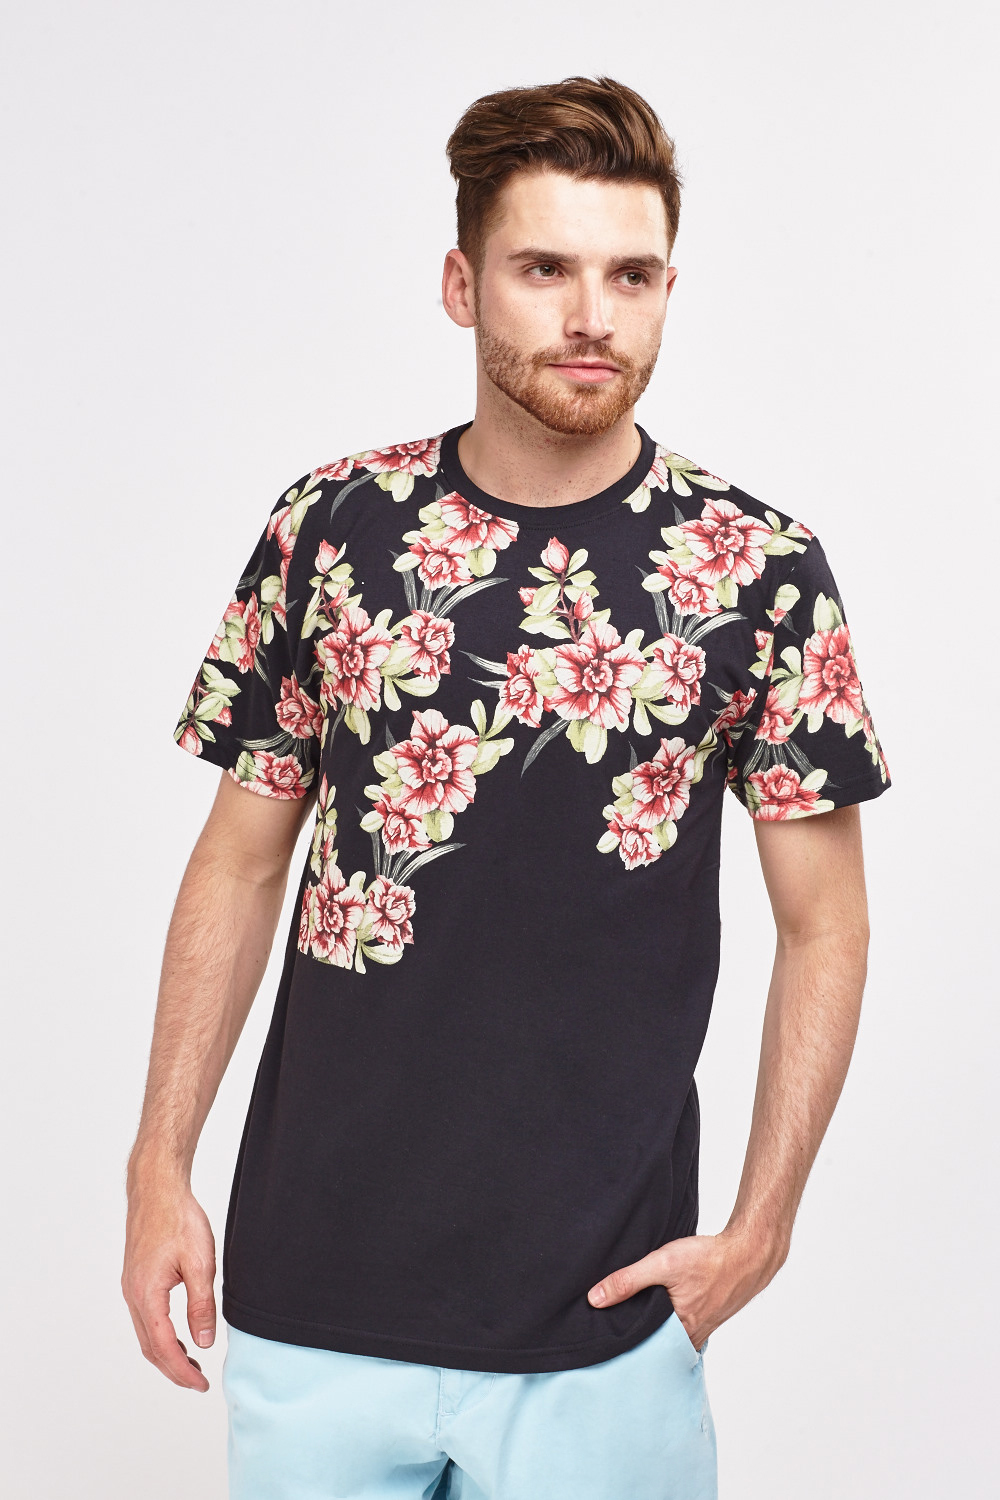 Floral Black T-Shirt - Just $6